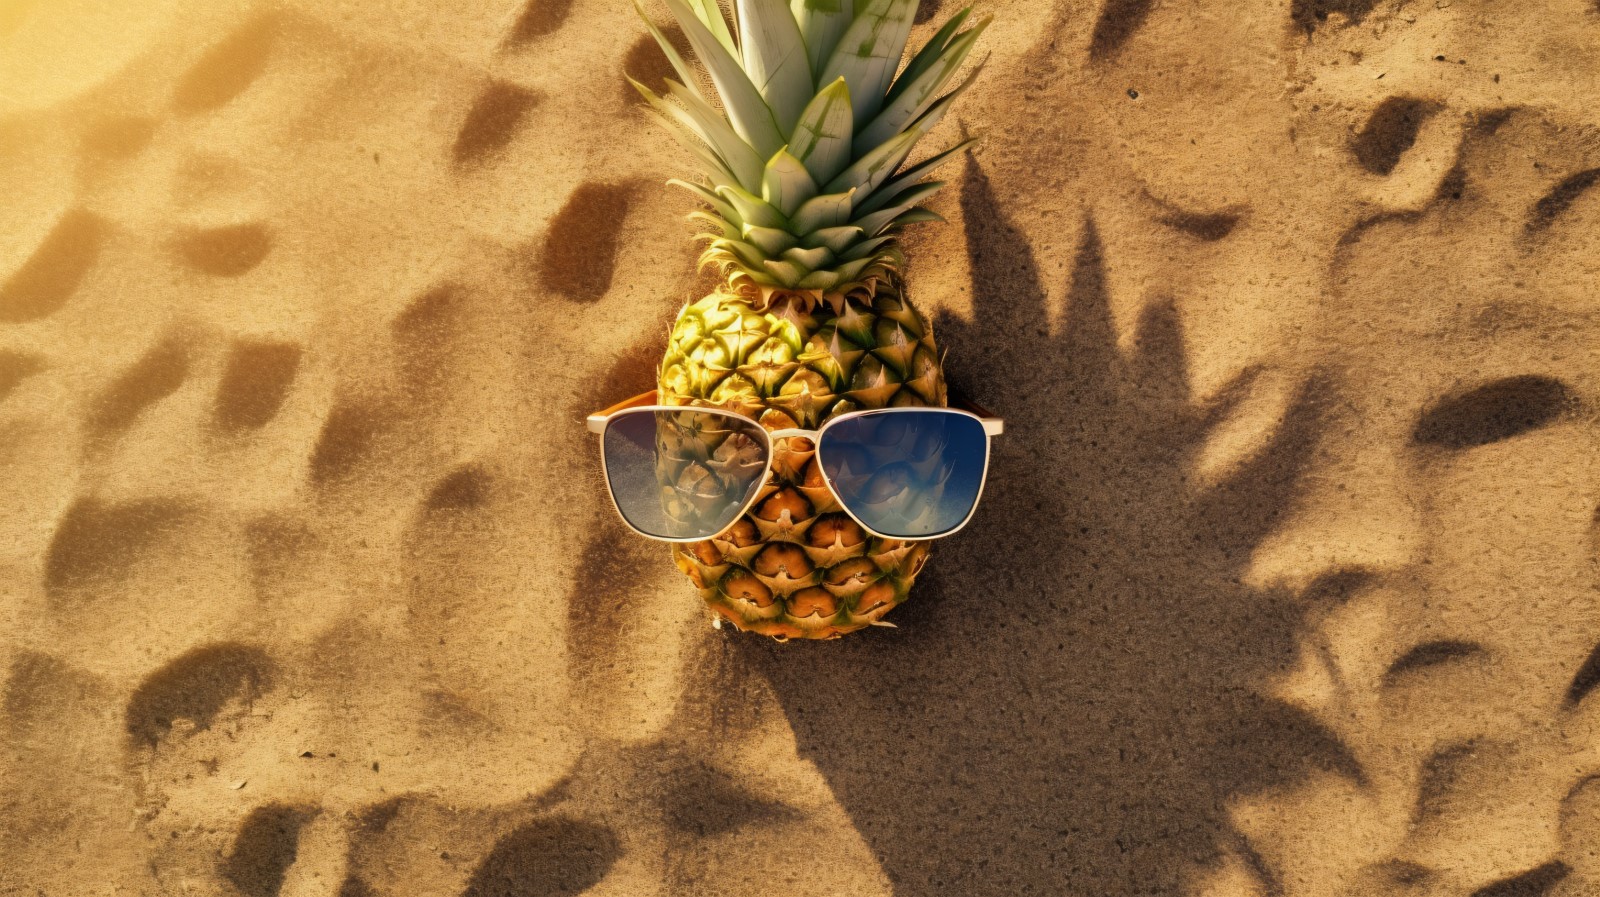 Halved pineapple and a sunglass kept on the sand 166